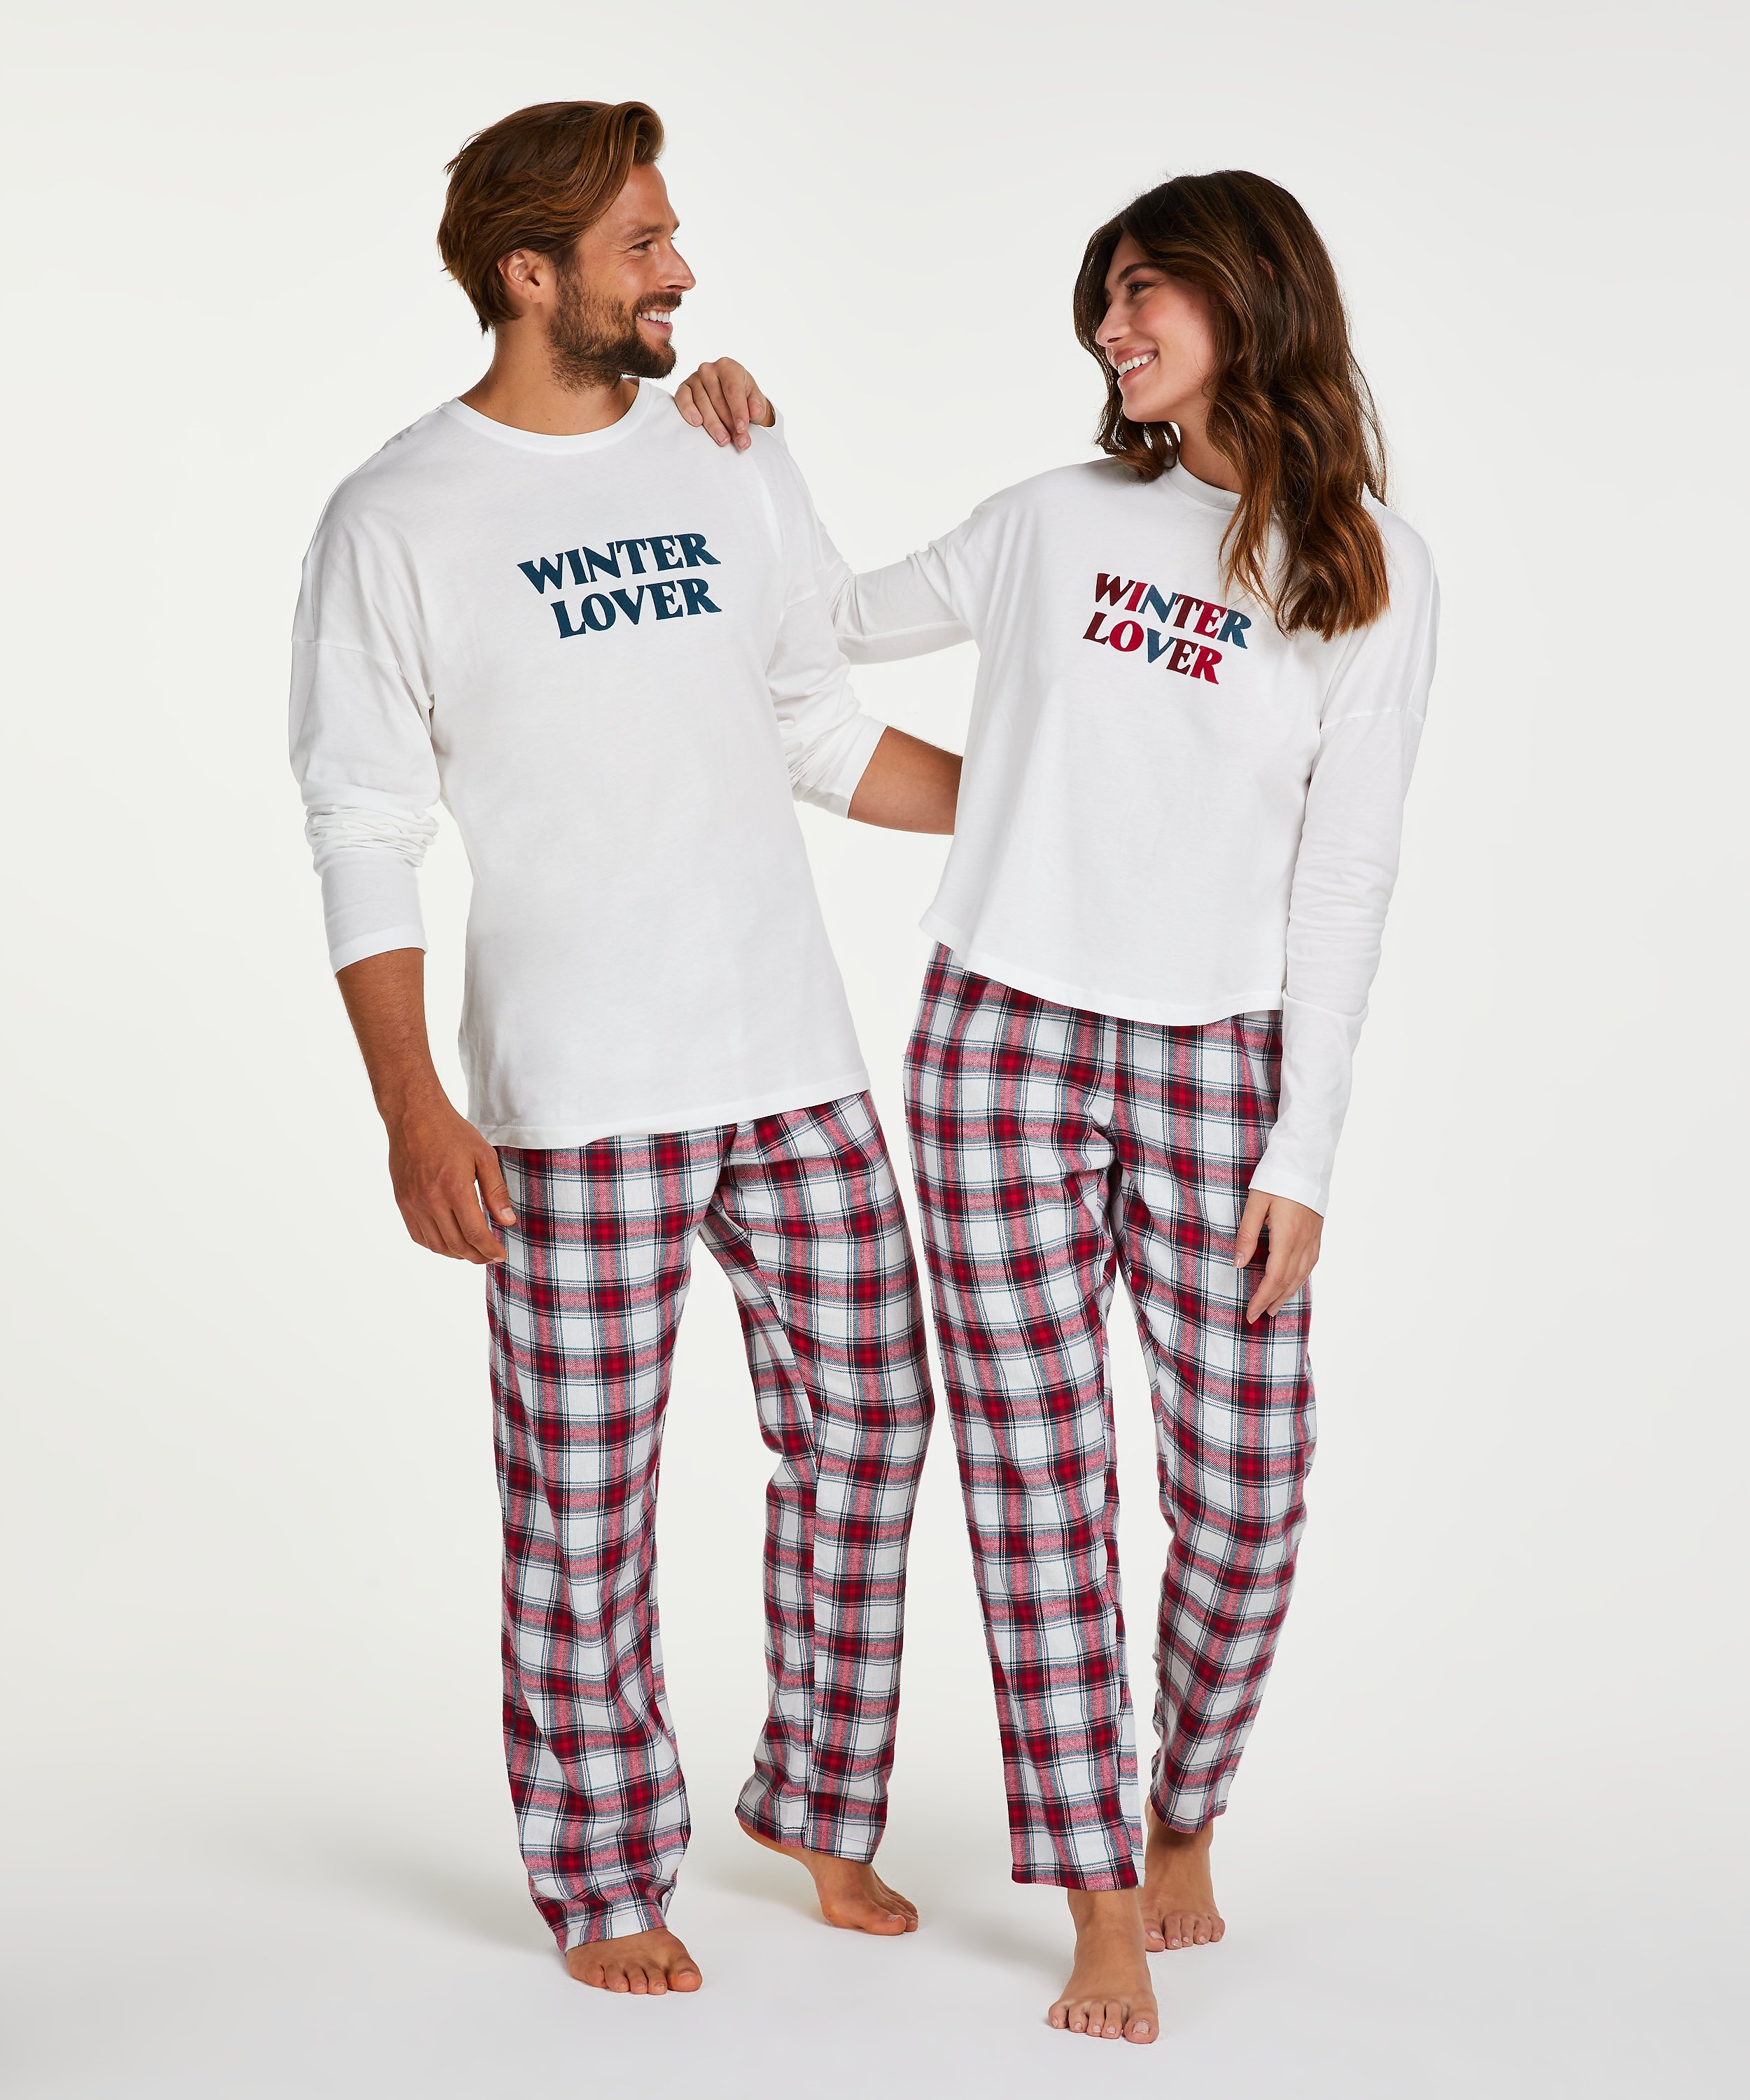 mengsel Schouderophalend Definitief Pyjama set for €32.99 - Pajamas - Hunkemöller